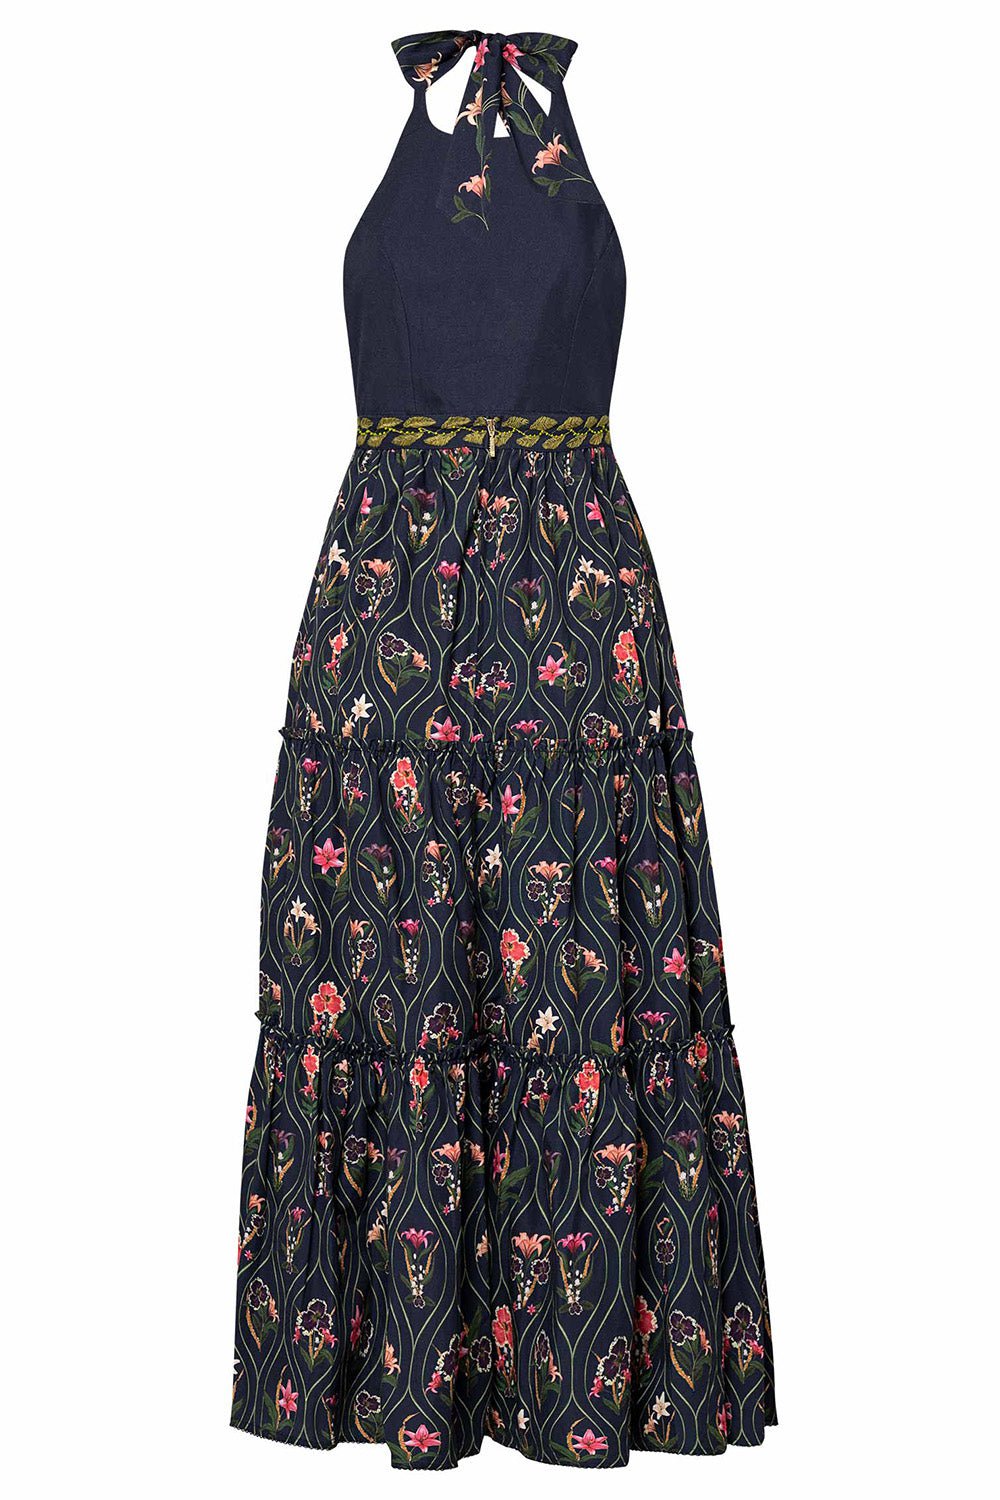 Consuelo Pacifico Dress – Marissa Collections